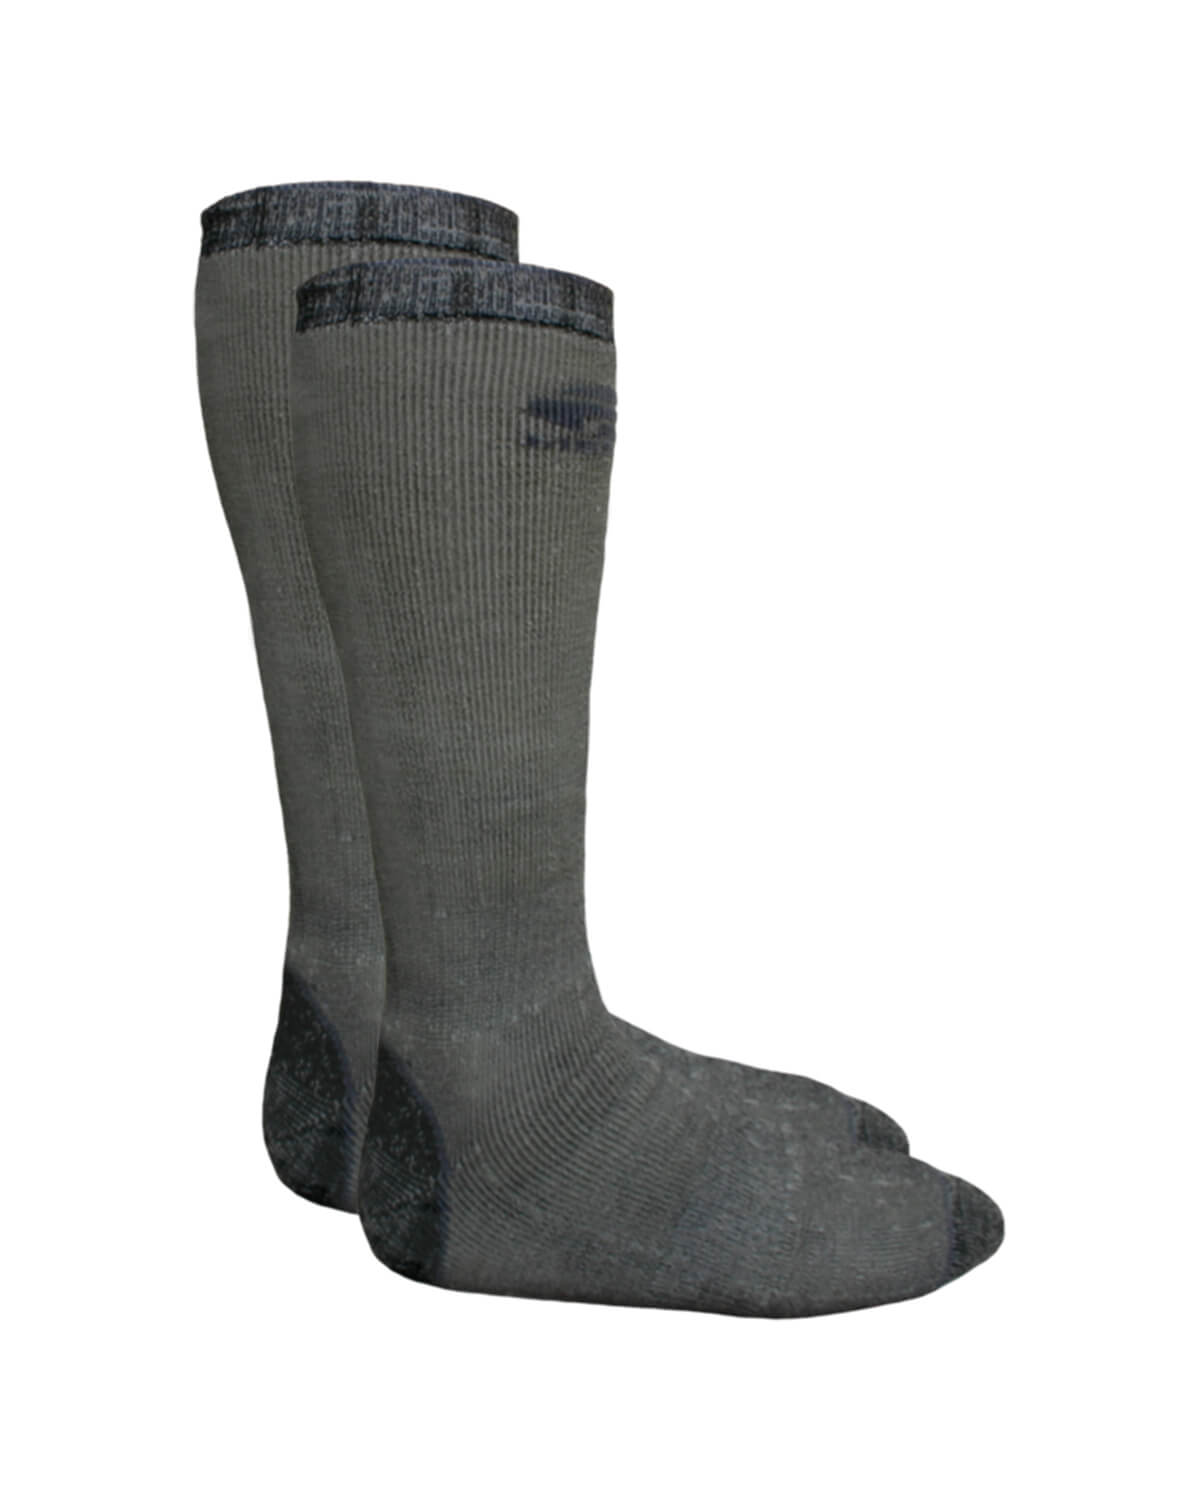 Unisex Pinnacle Merino Wool EXPEDITION Suit Socks